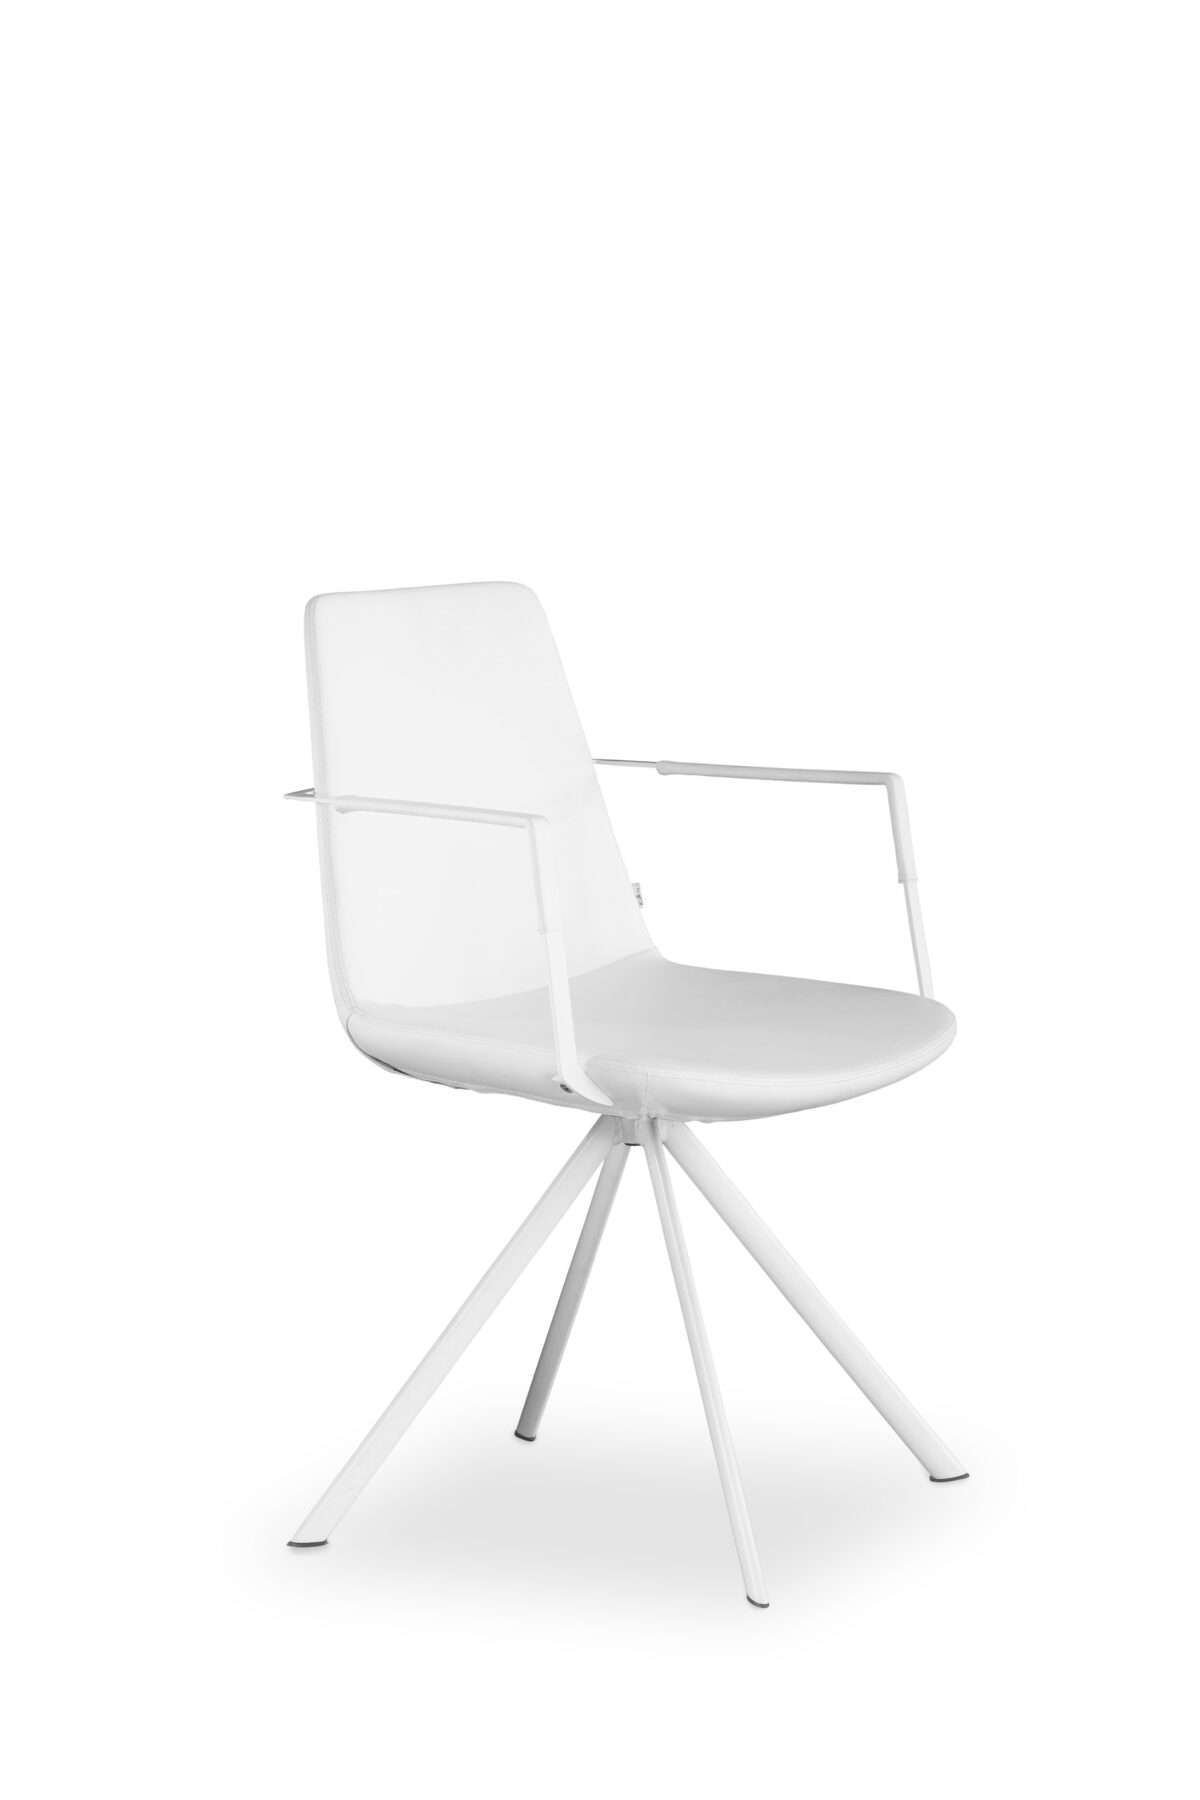 Rafael armchair white